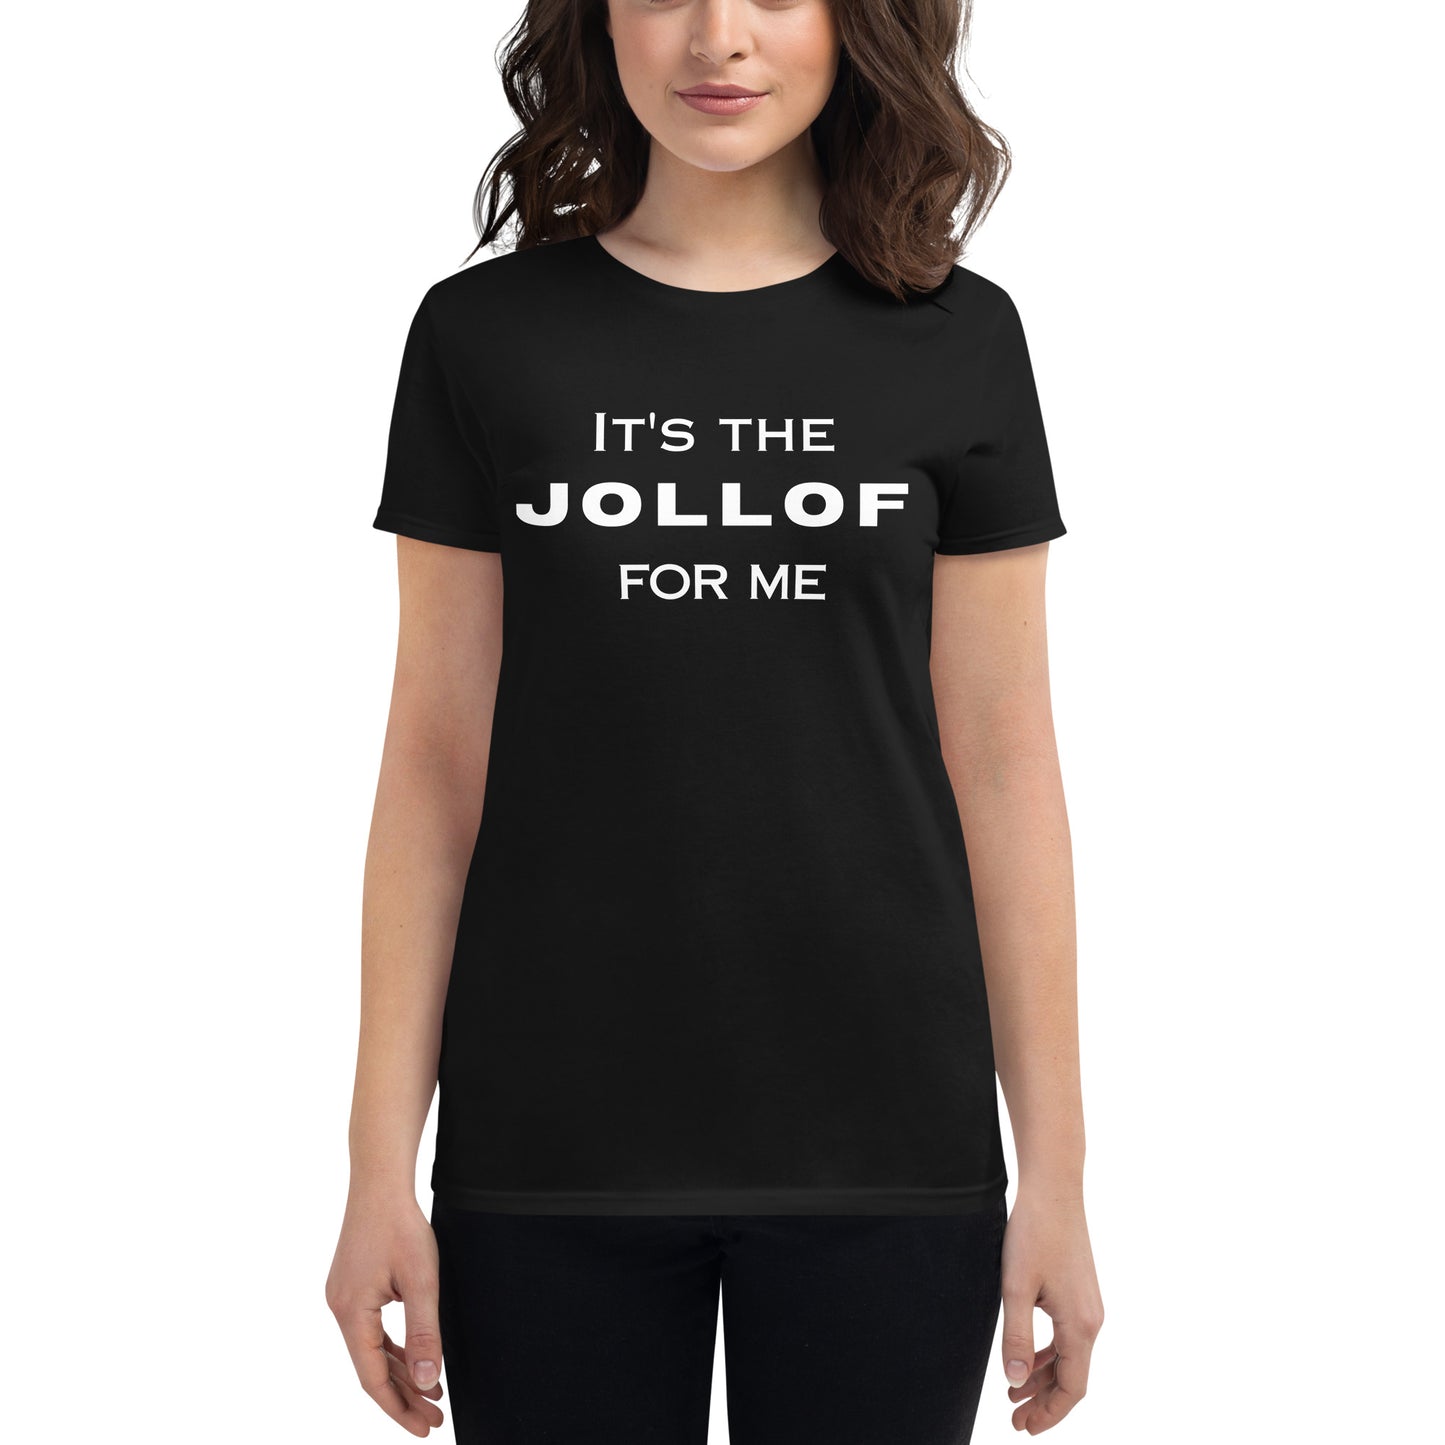 "It's the Jollof for me" T-shirt